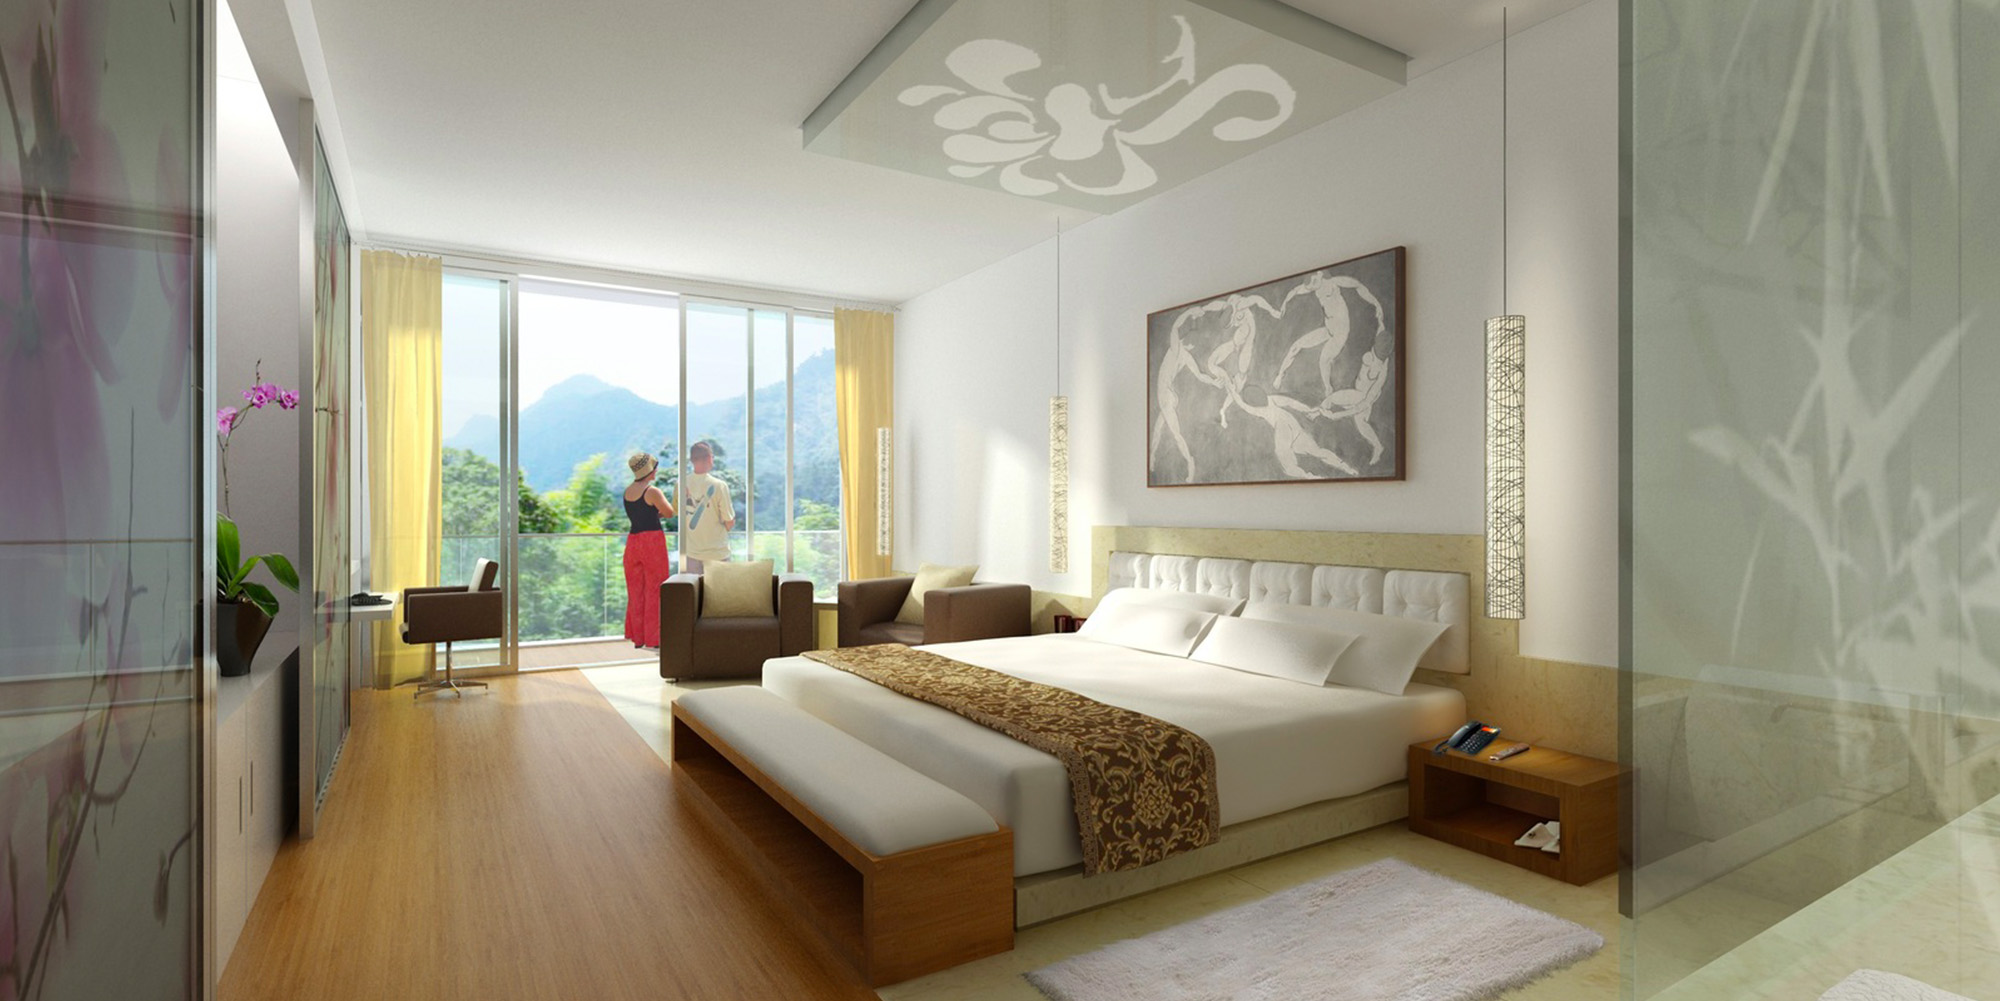 Elegance and Designed Rooms